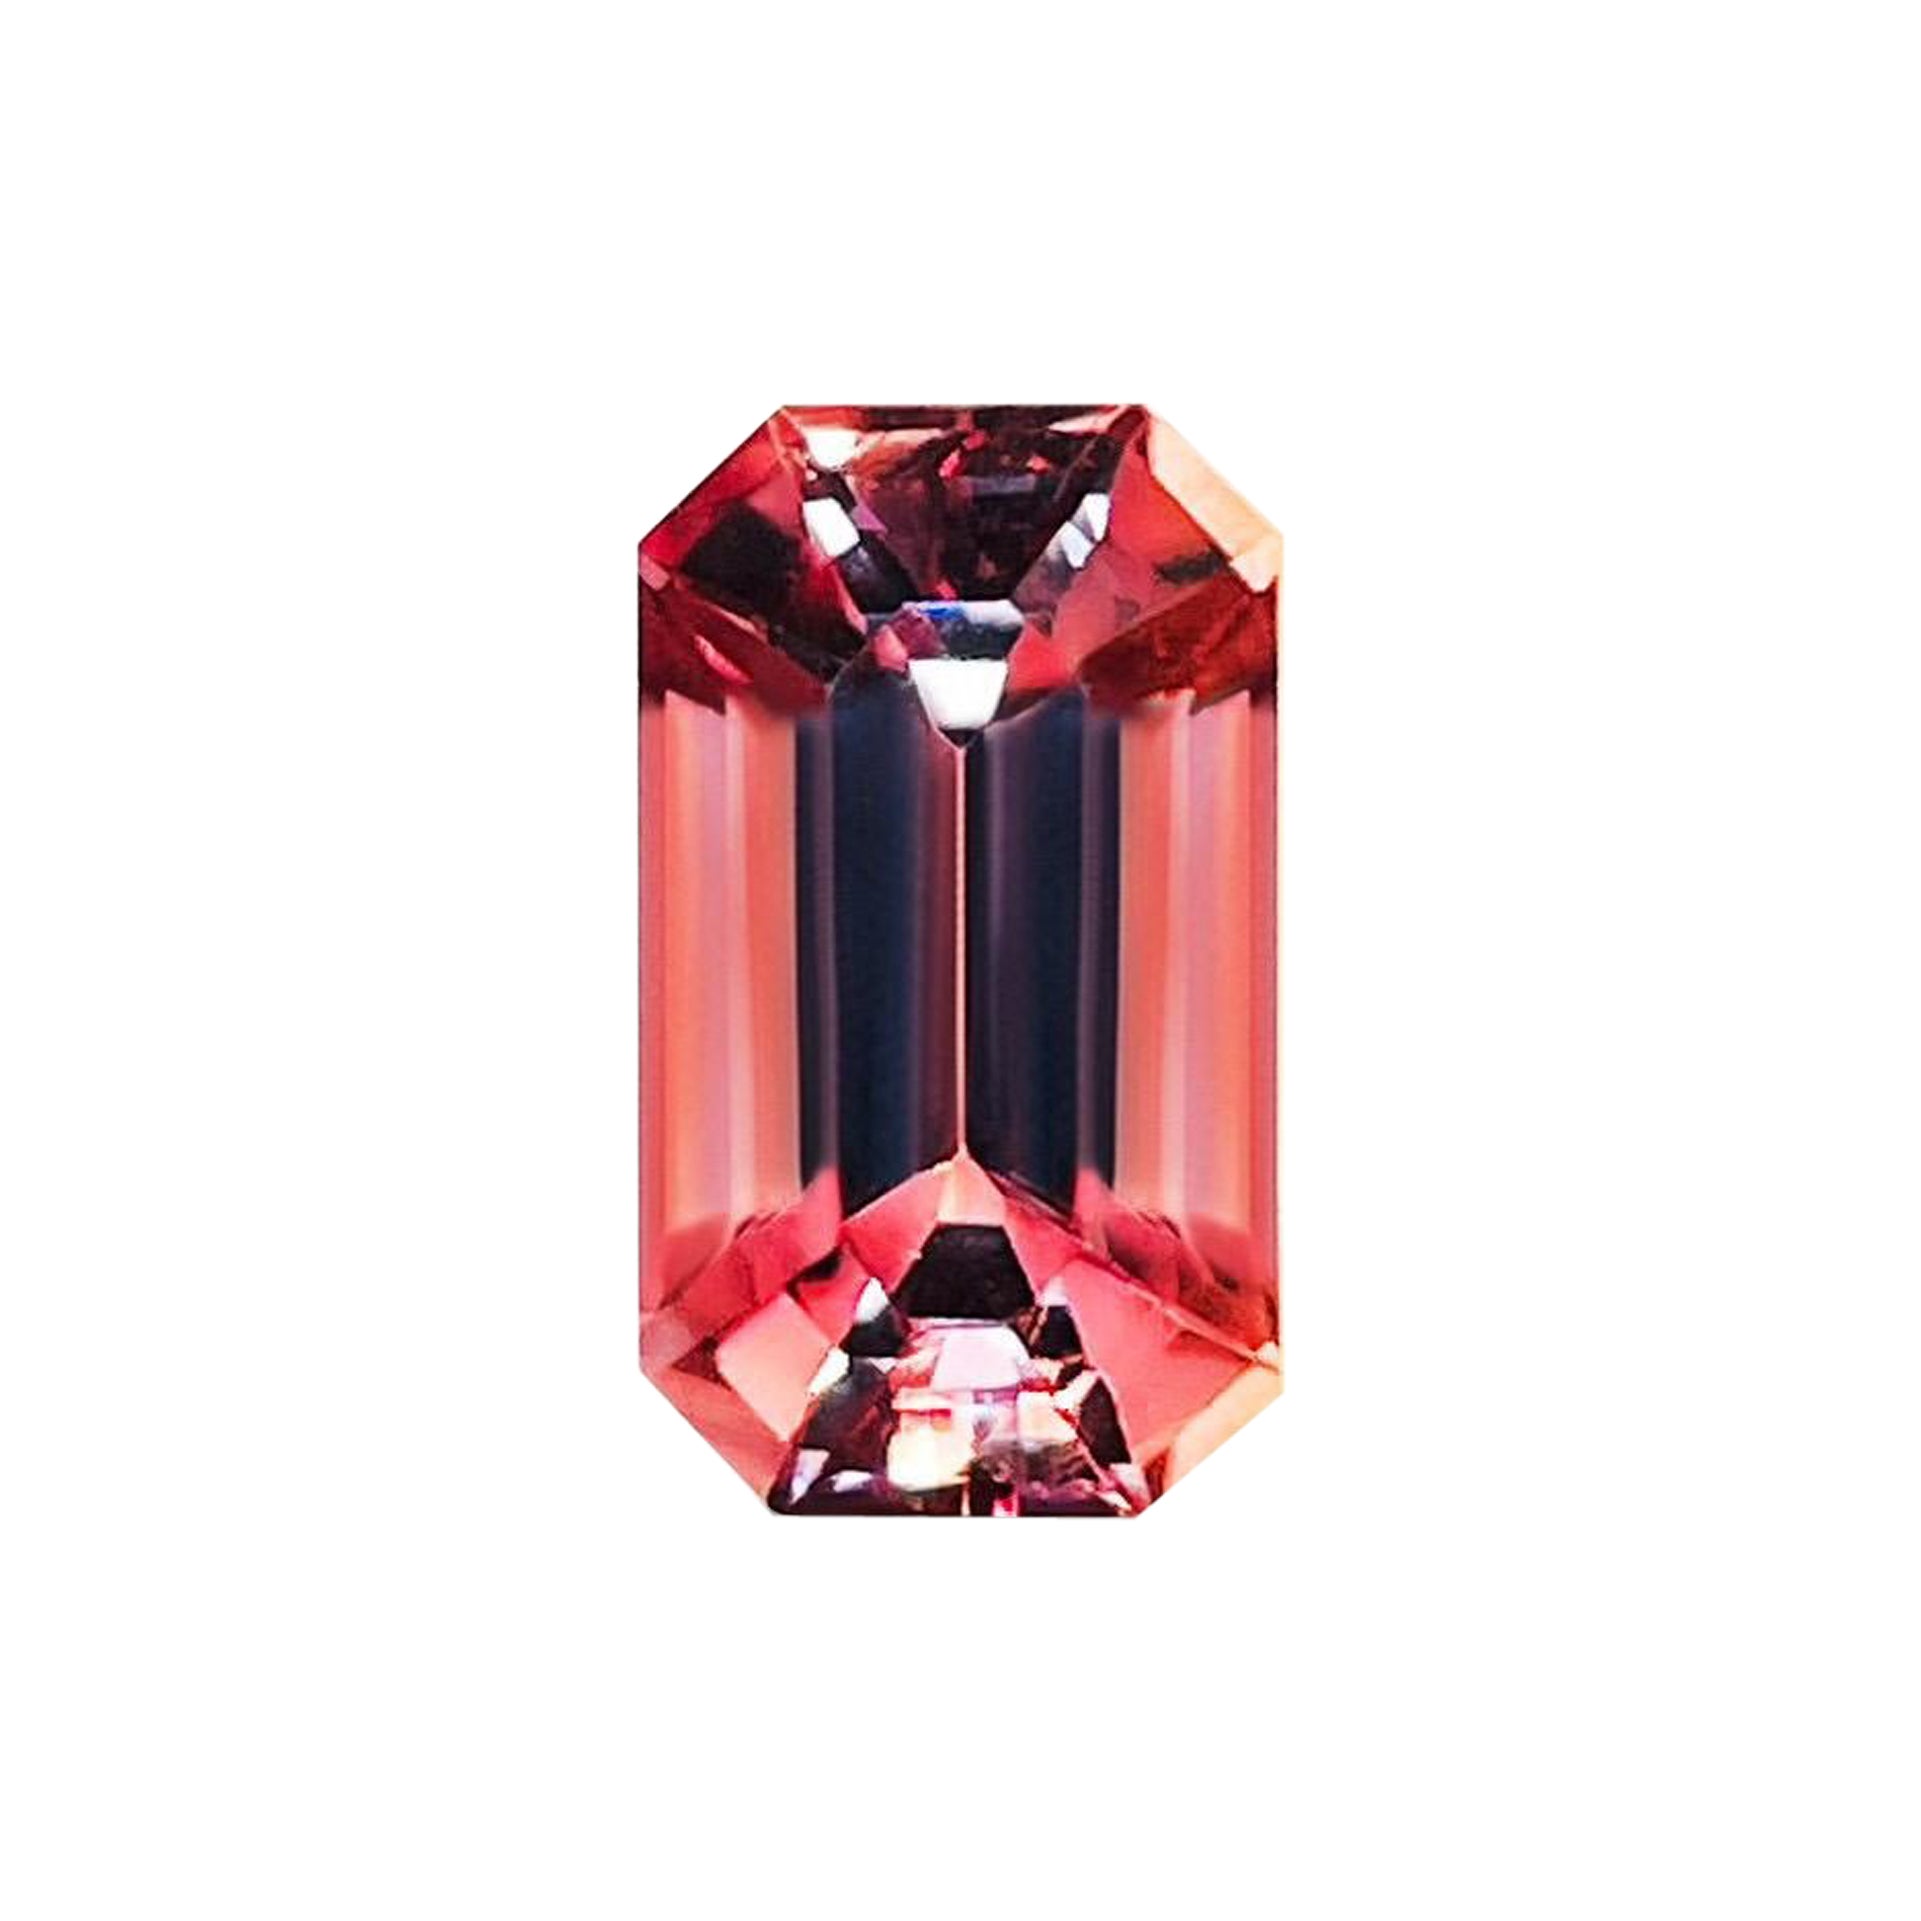 Pink diaspore zultanite color change gemstone pink change to red 3.21ct For Sale